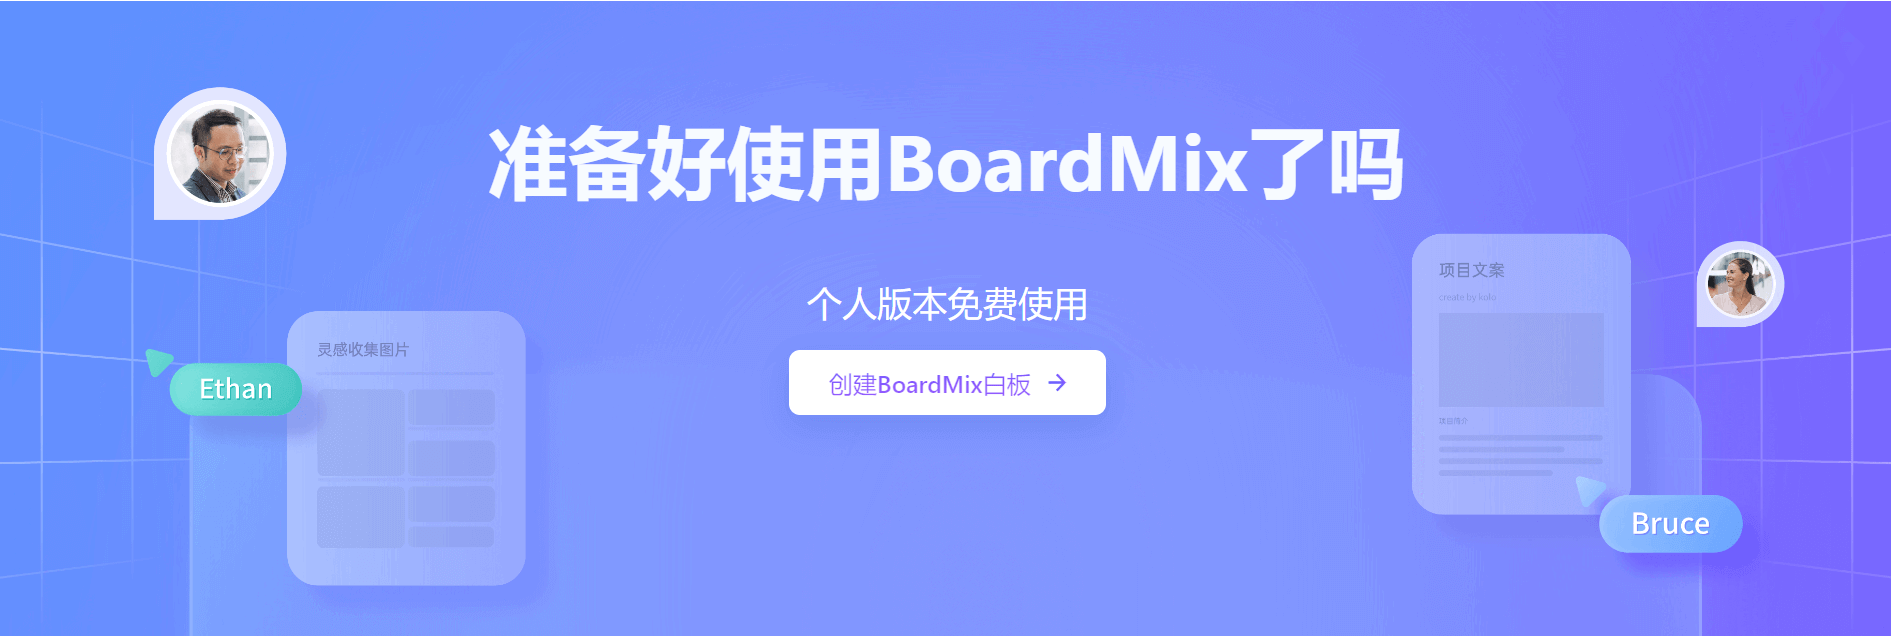 BoardMix在线白板